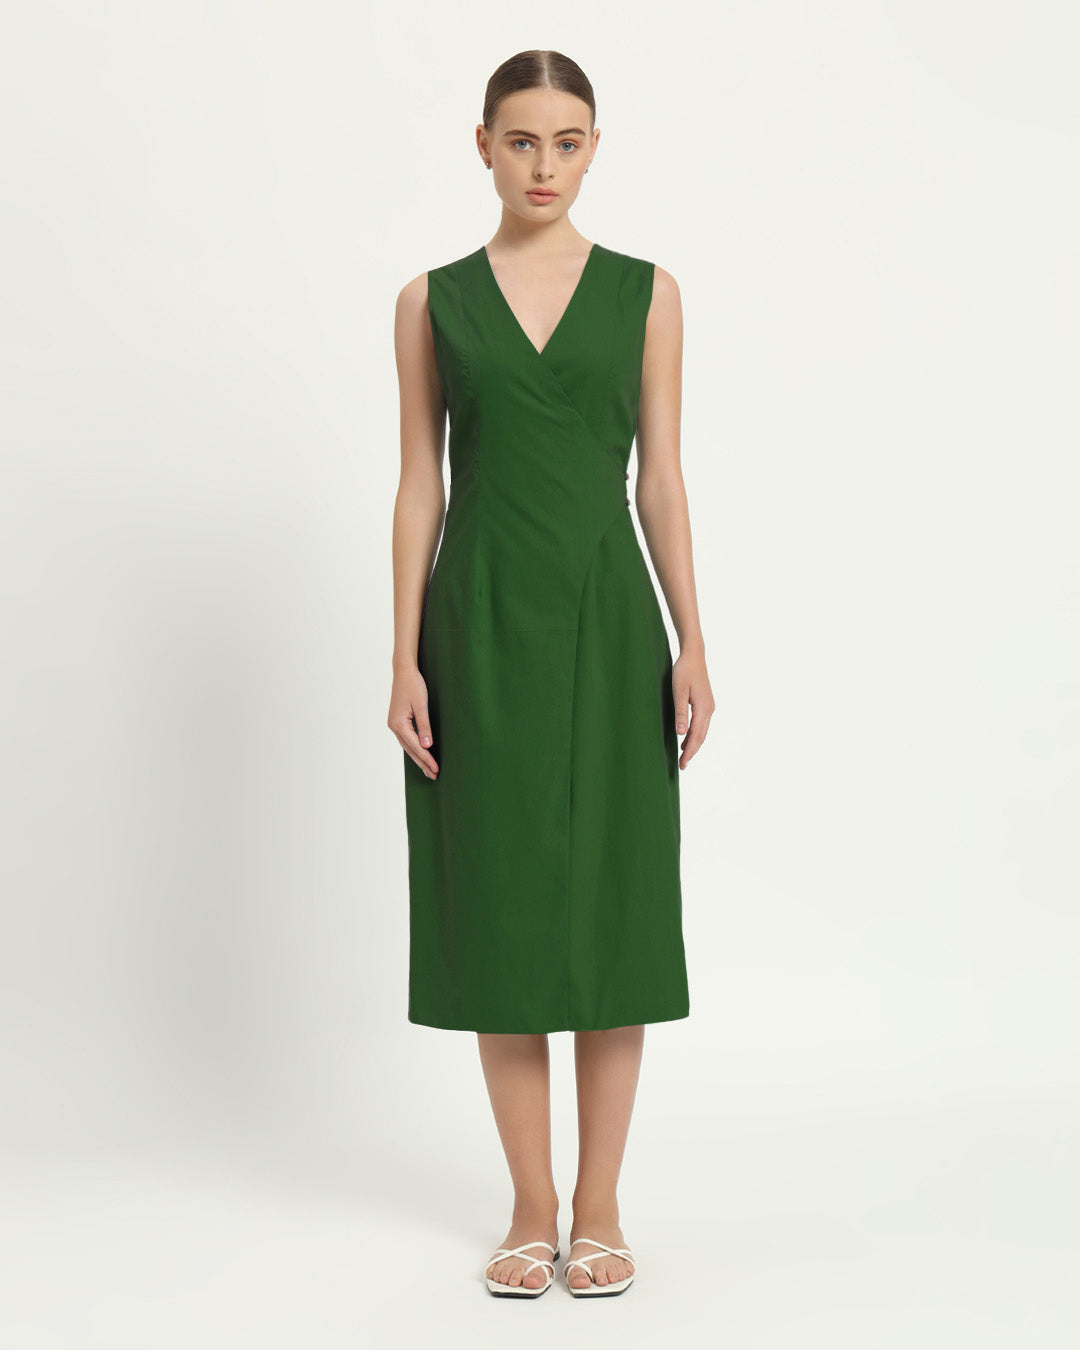 The Aurich Emerald Cotton Dress